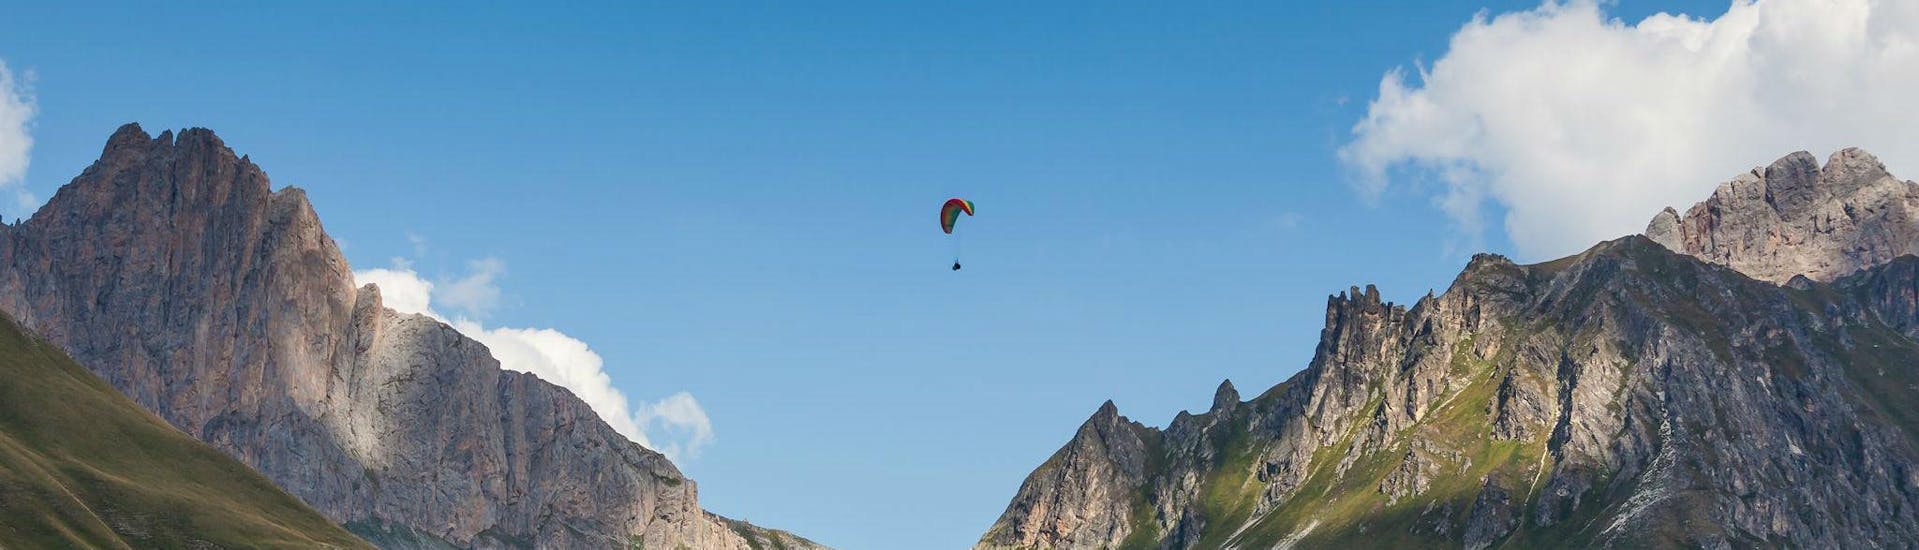 Acrobatisch tandemparagliden in Serre-Chevalier - Chantemerle (vanaf 7 j.) - Col du Granon.